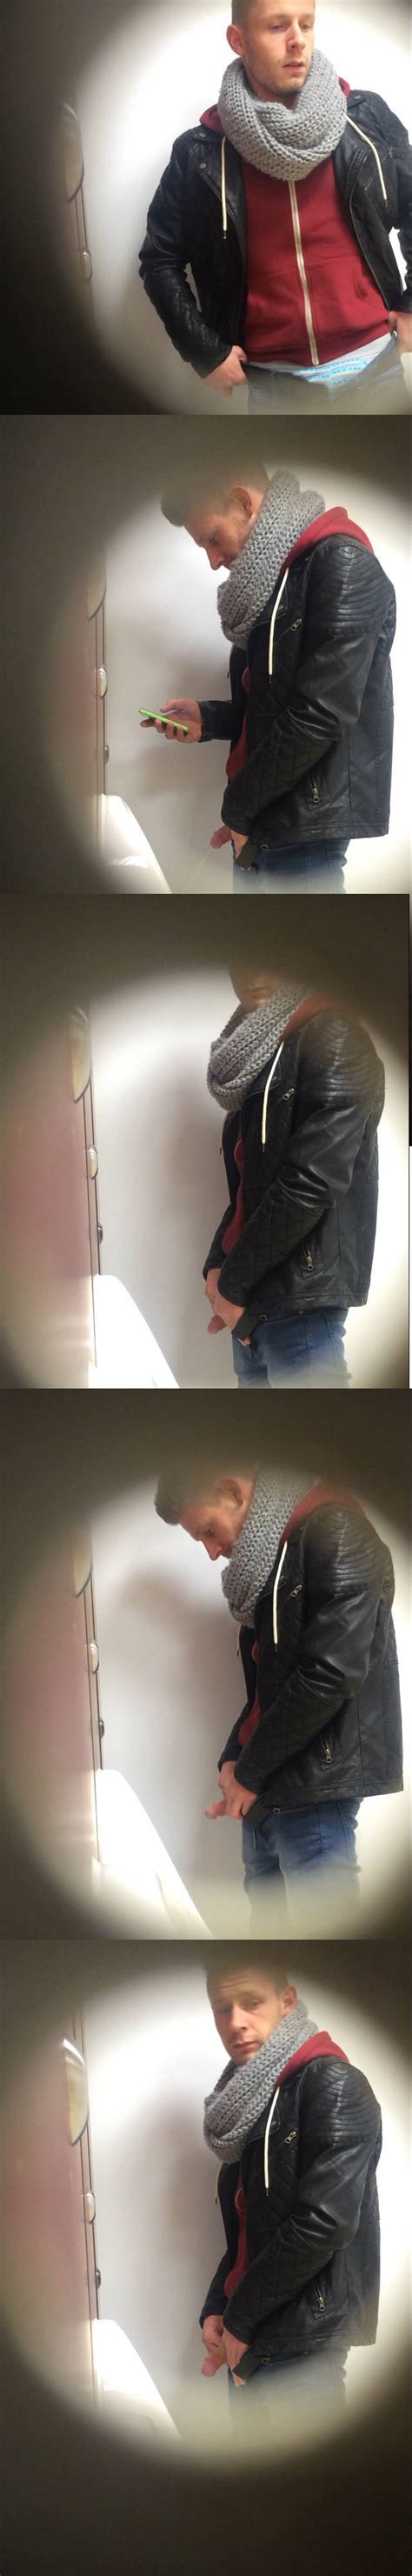 Hidden Cam Guy Caught Peeing Public Urinal Spycamfromguys Hidden Cams Spying On Men